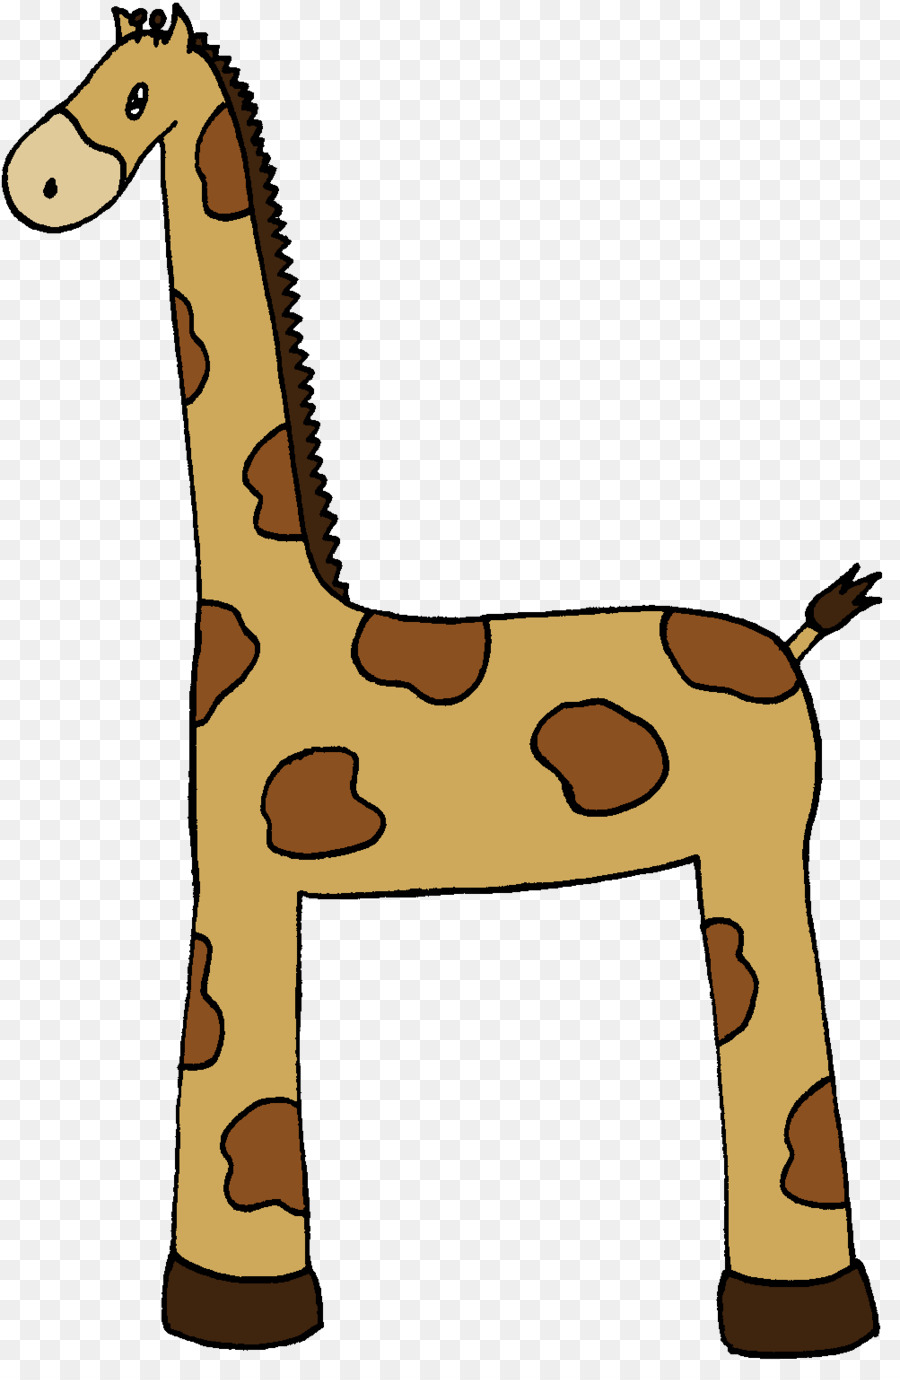 Baby Giraffes Clip art Image Portable Network Graphics - giraffe png download - 1003*1522 - Free Transparent Giraffe png Download.